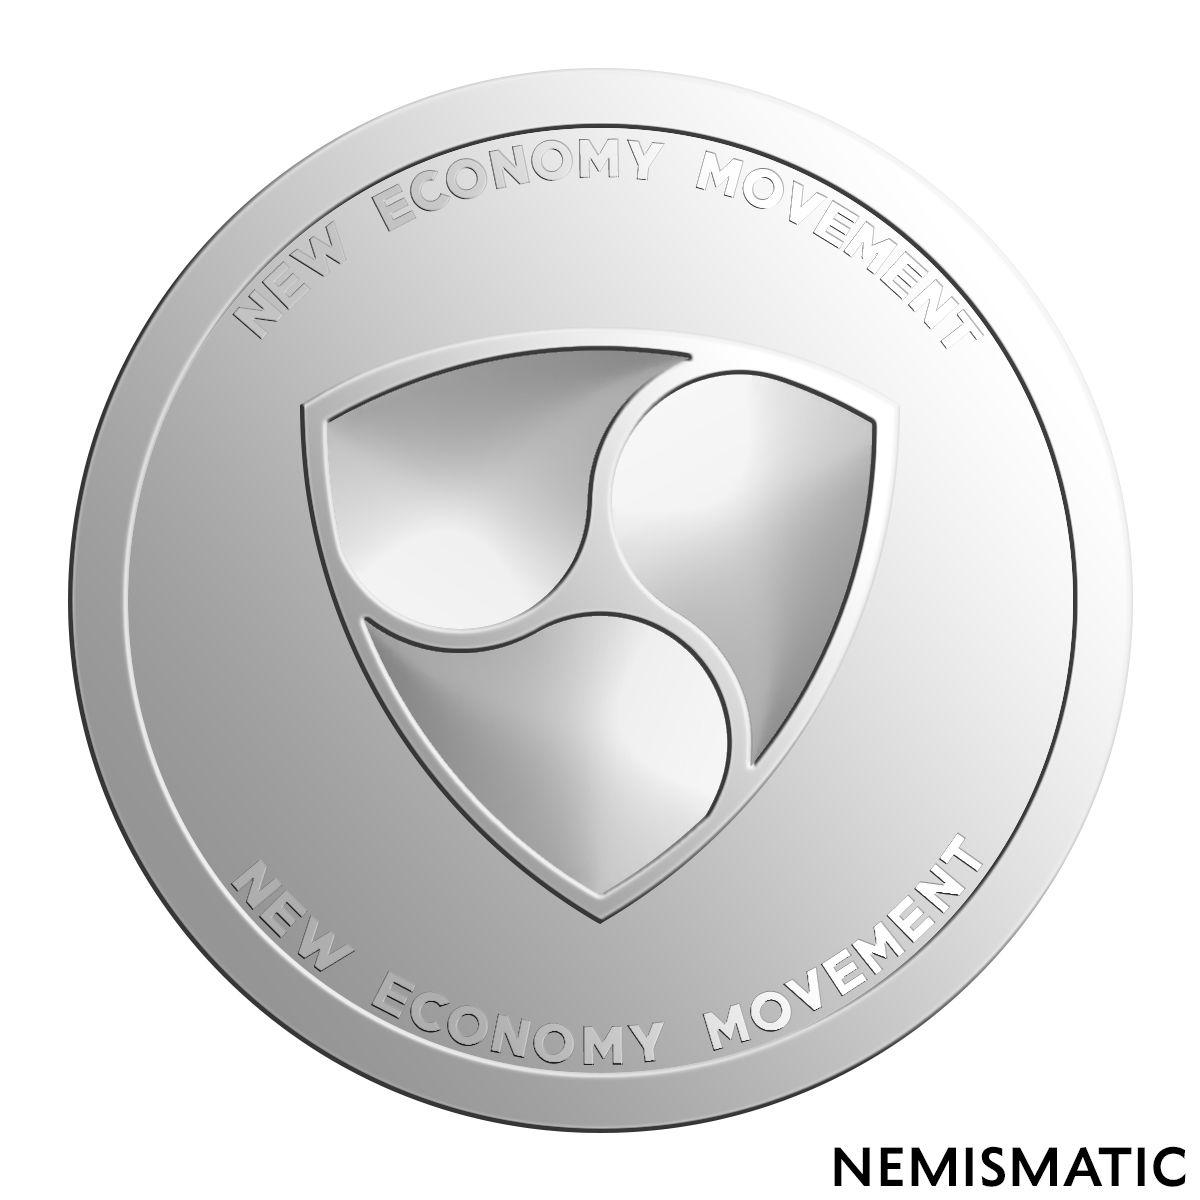 Silver Circle Logo - NEM colorful logo. What do you think? - Ideas - NEM Forum